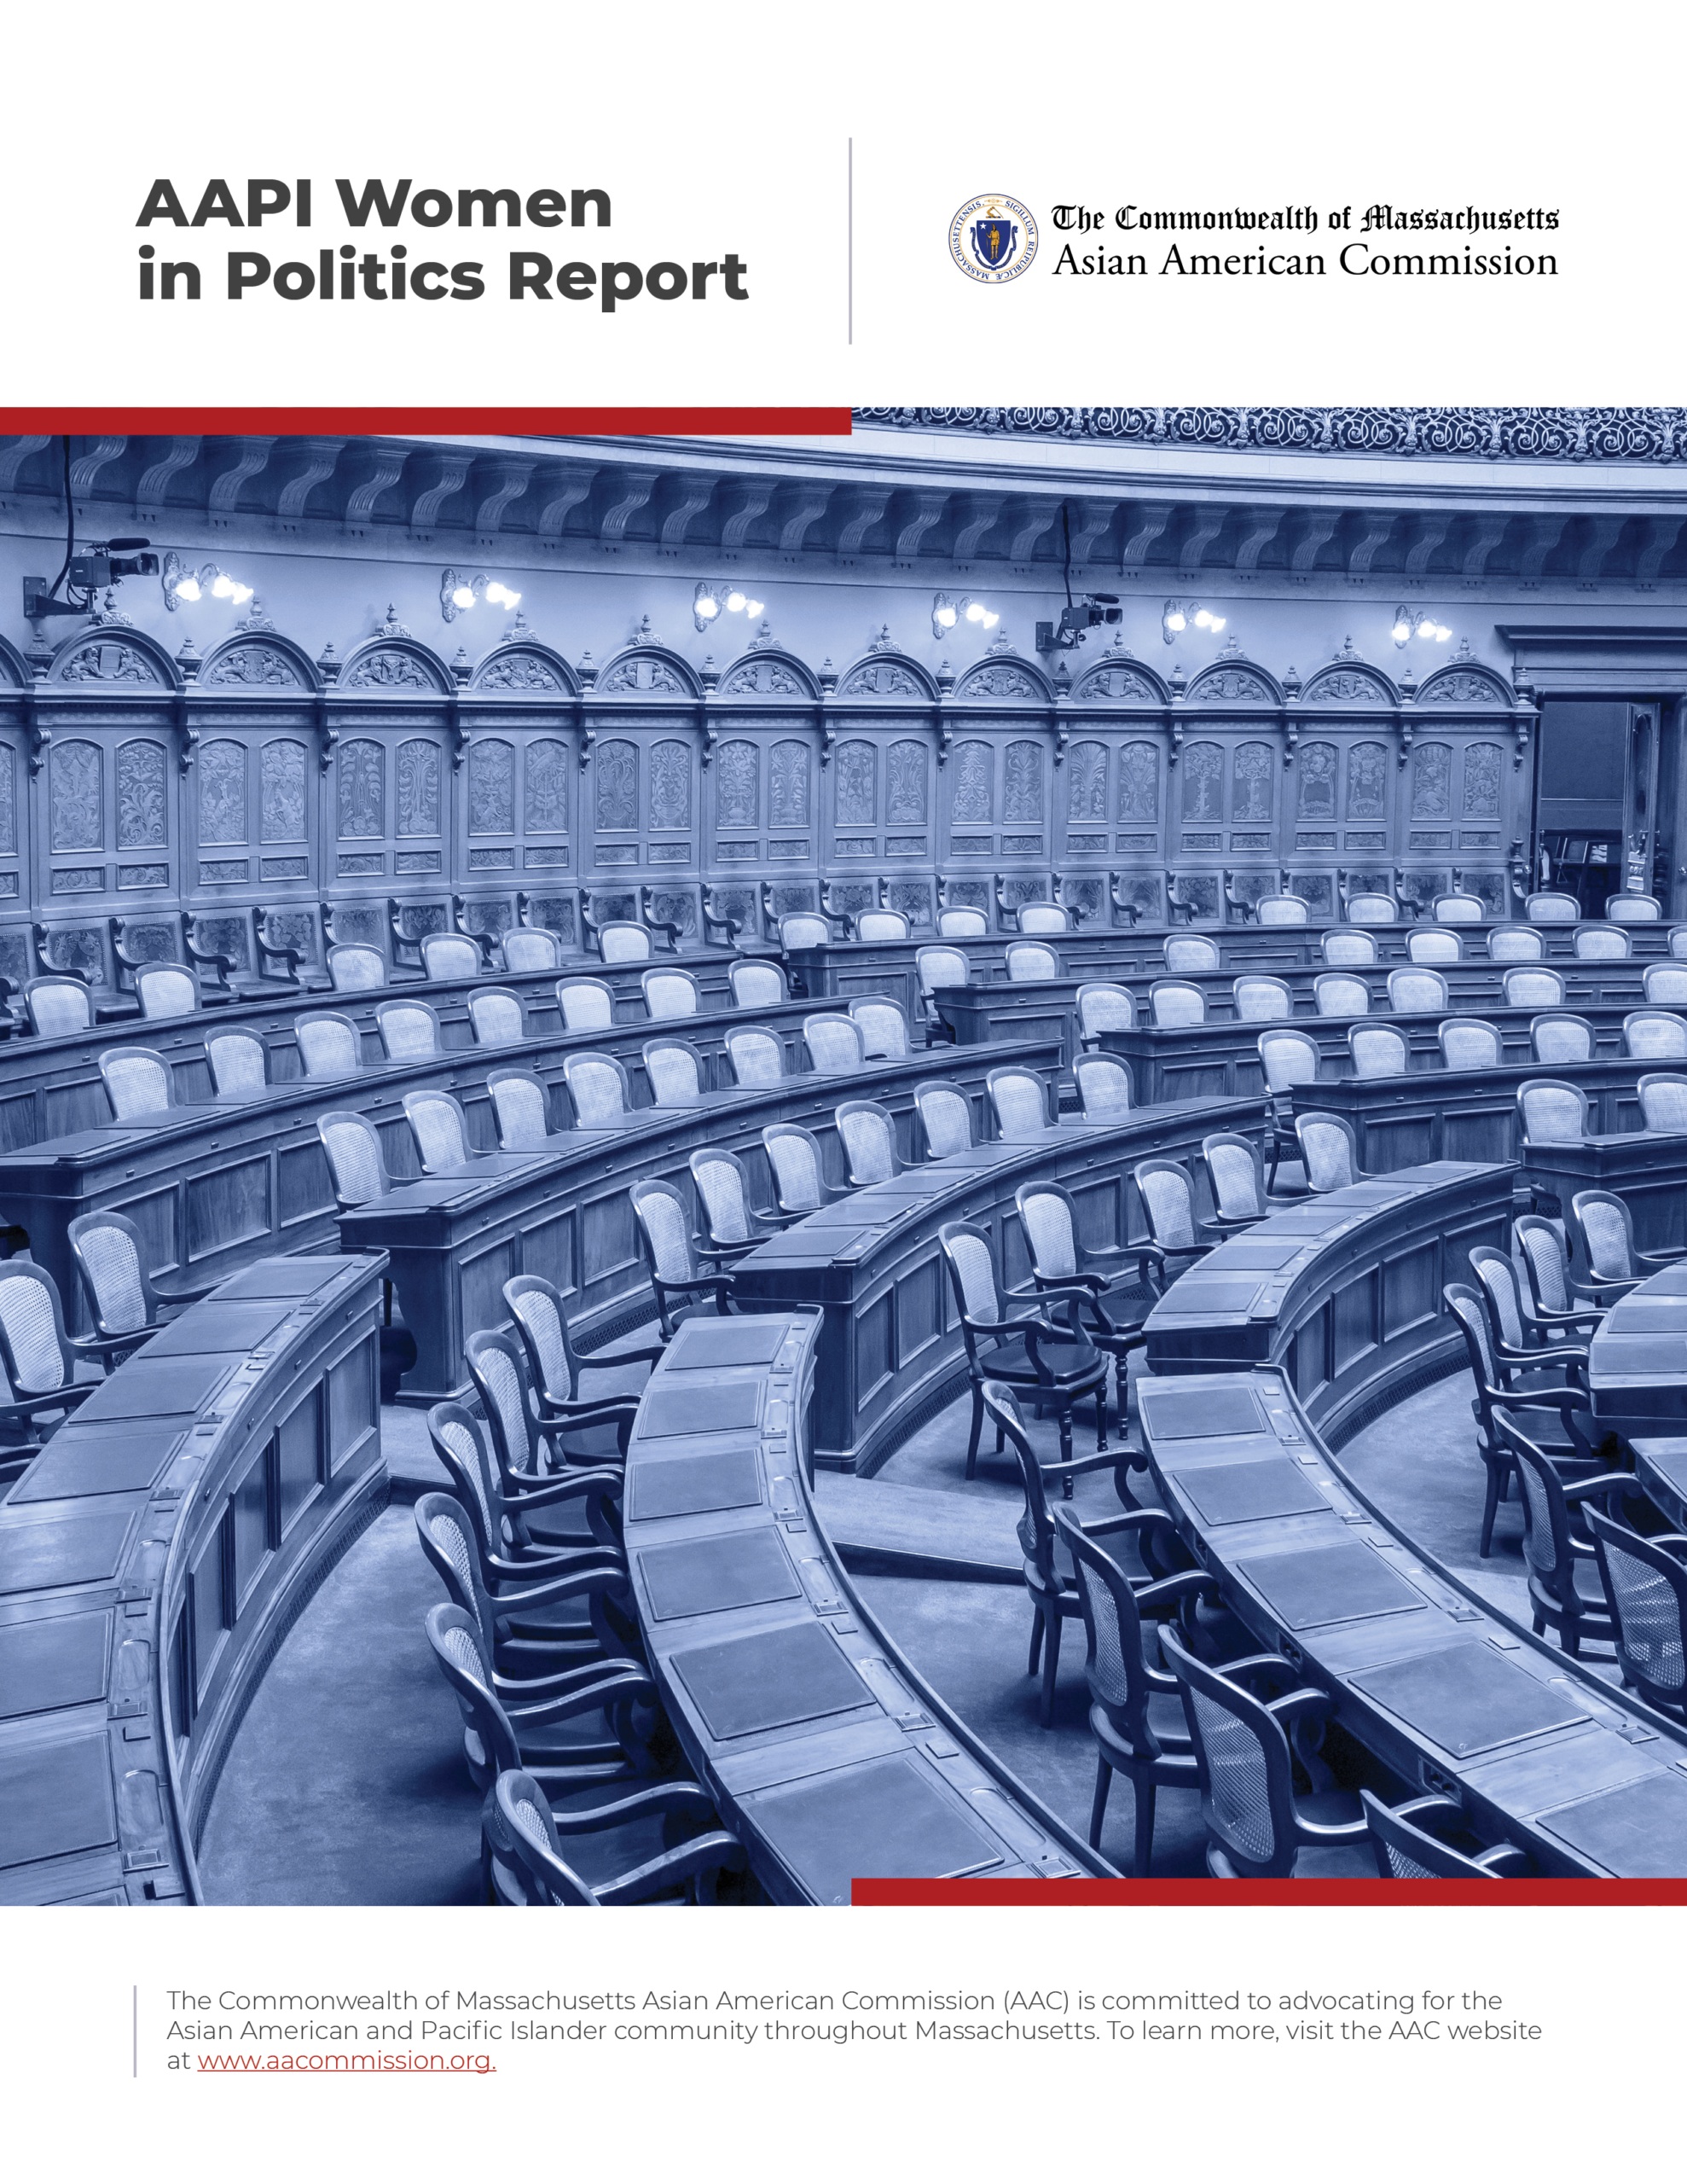 AAPI Women in Politics: National Report and Massachusetts Report